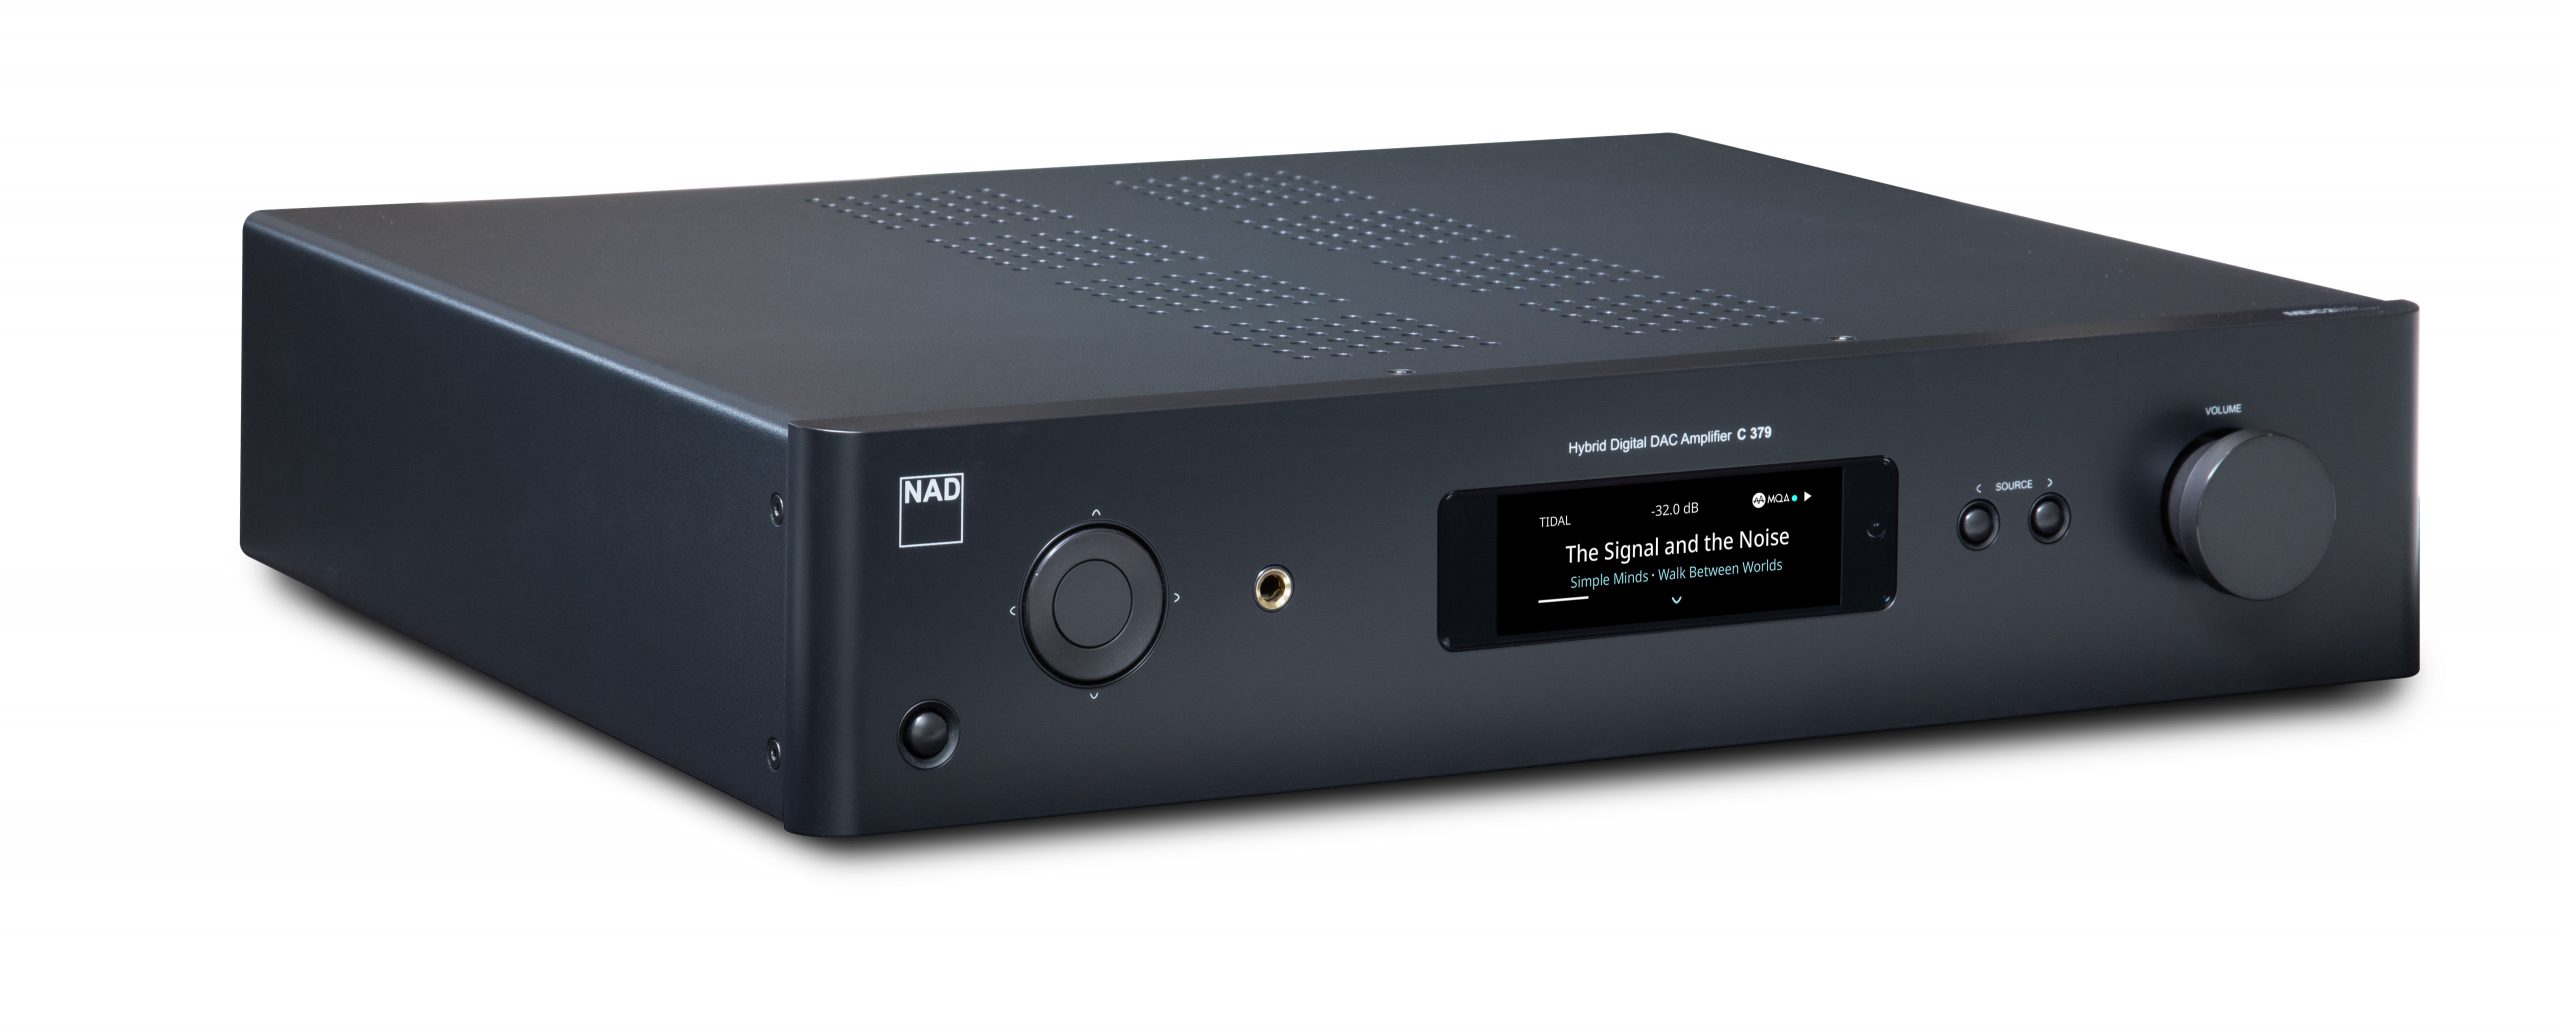 NAD Introduces the C 379 HybridDigital DAC Amplifier